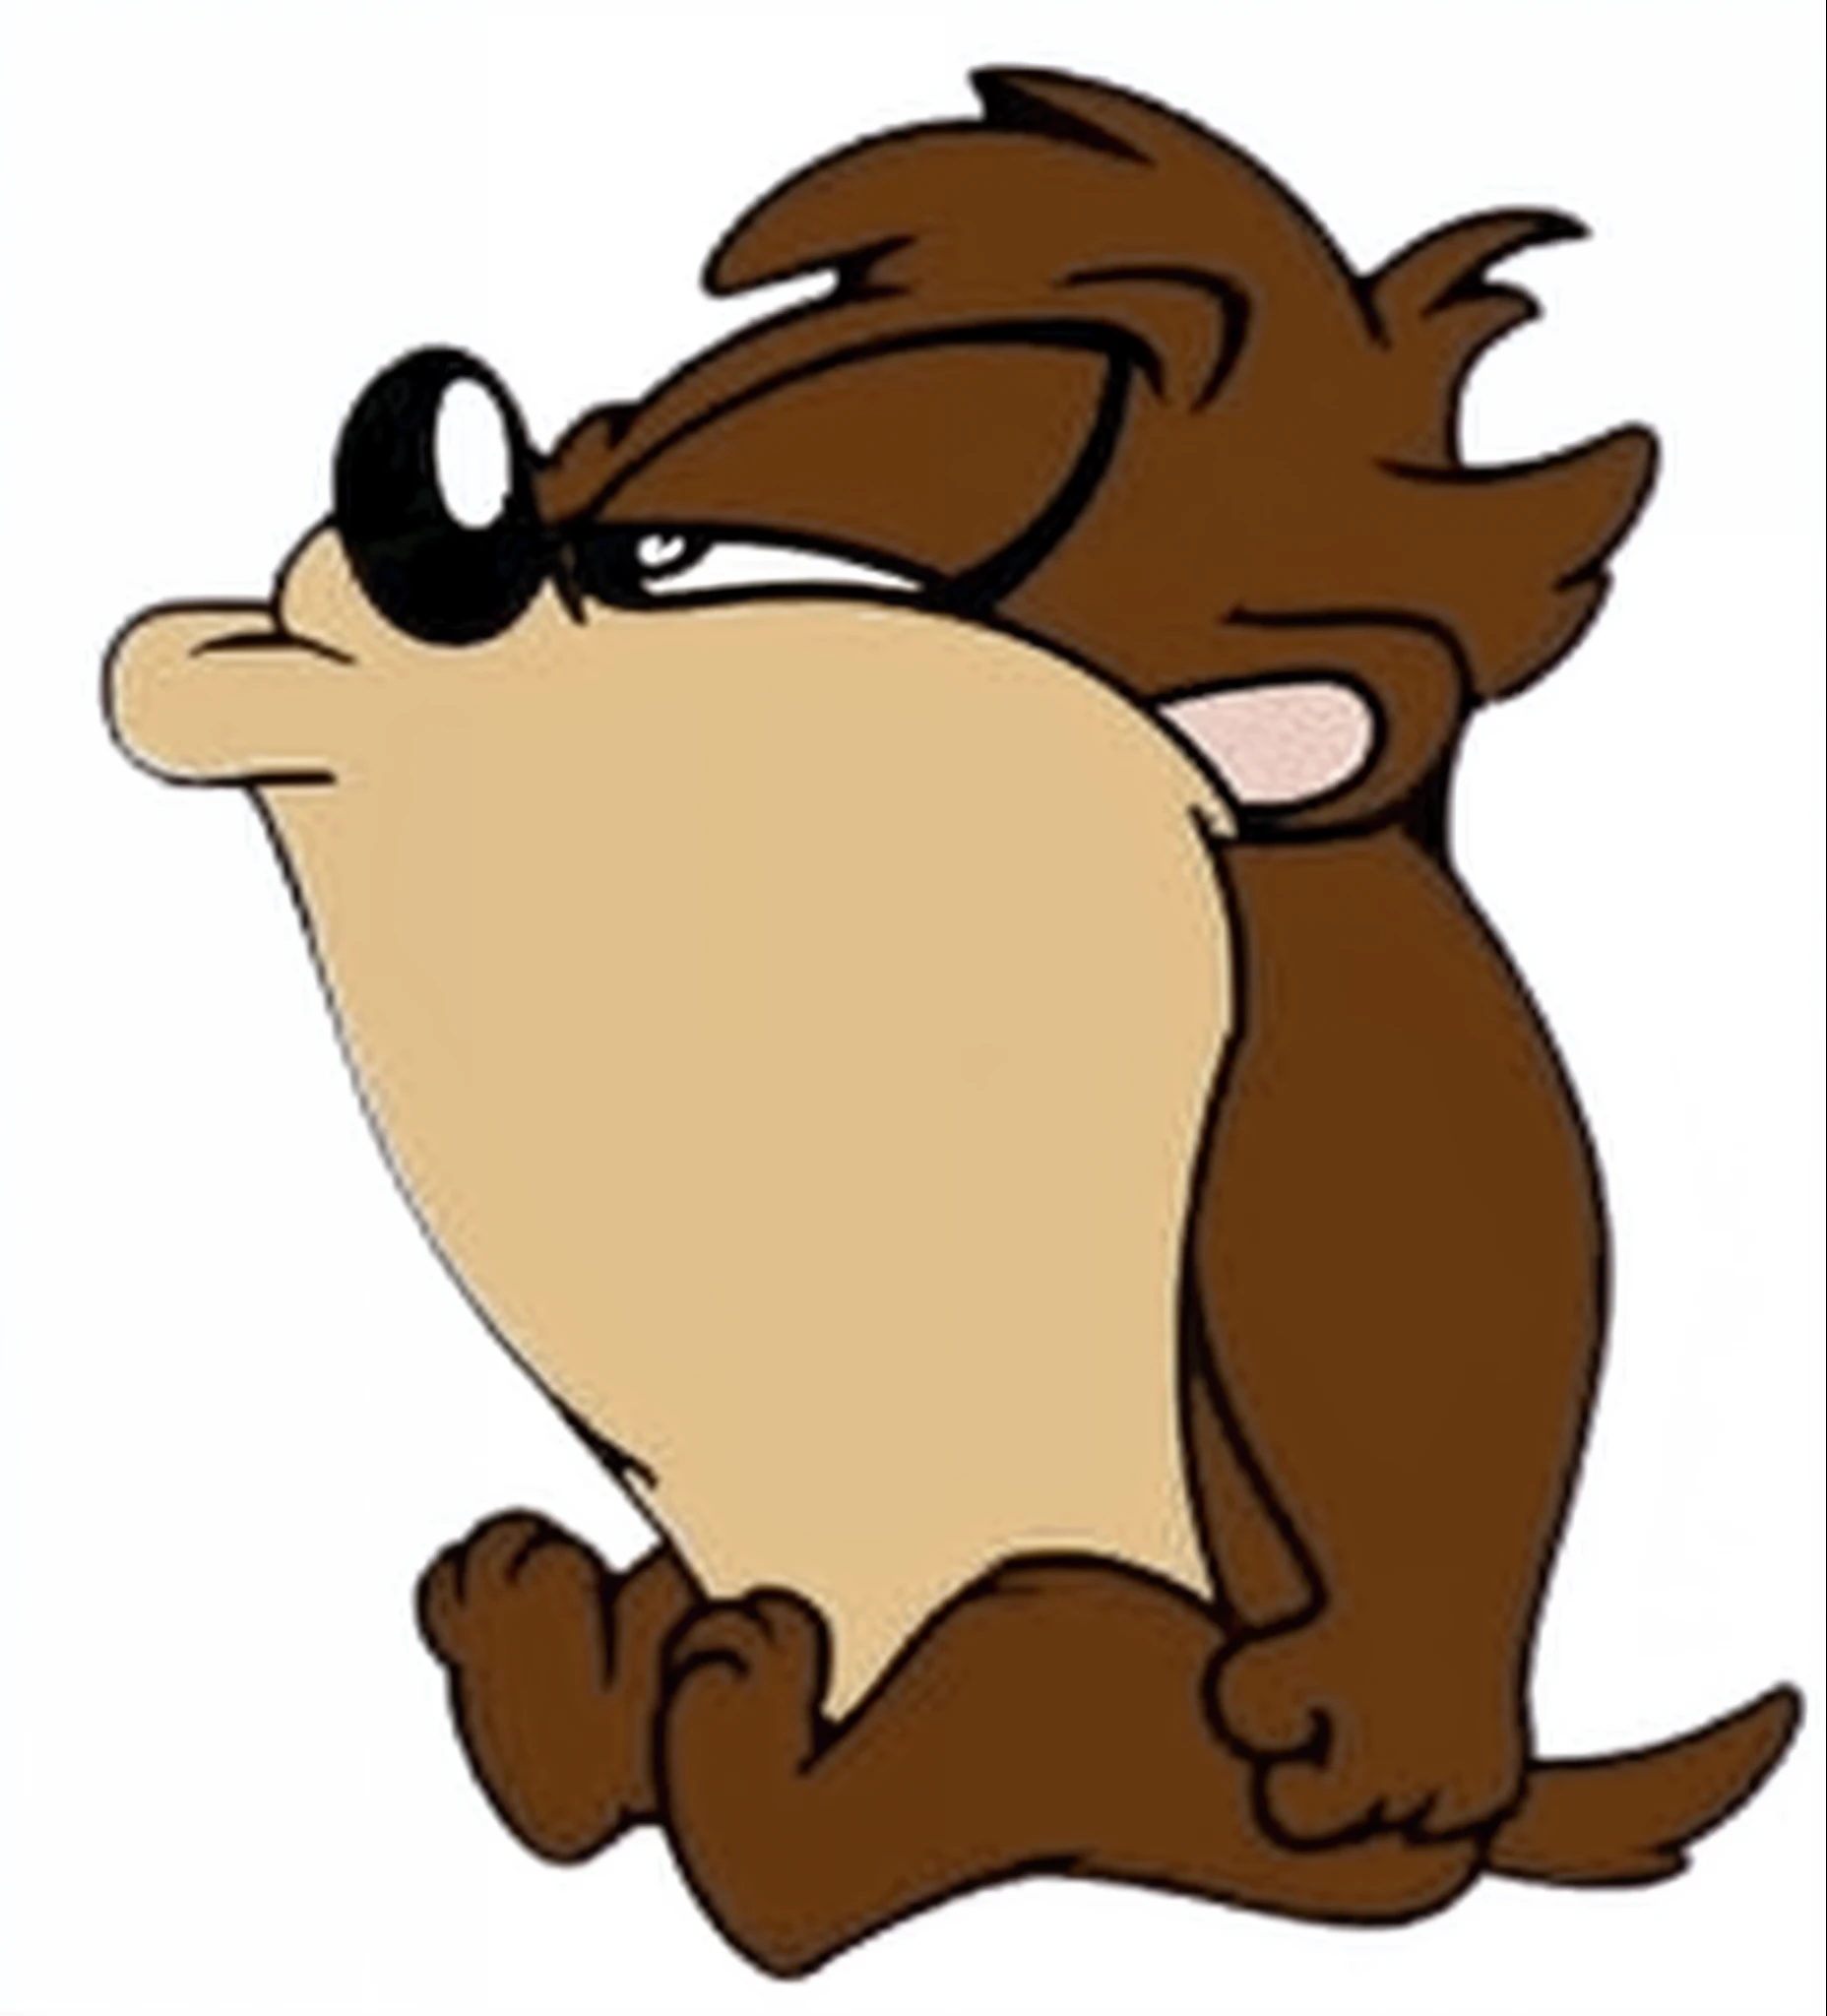 Big Toon Porn - Cartoon of a brown dog with a big nose and a big nose - SeaArt AI